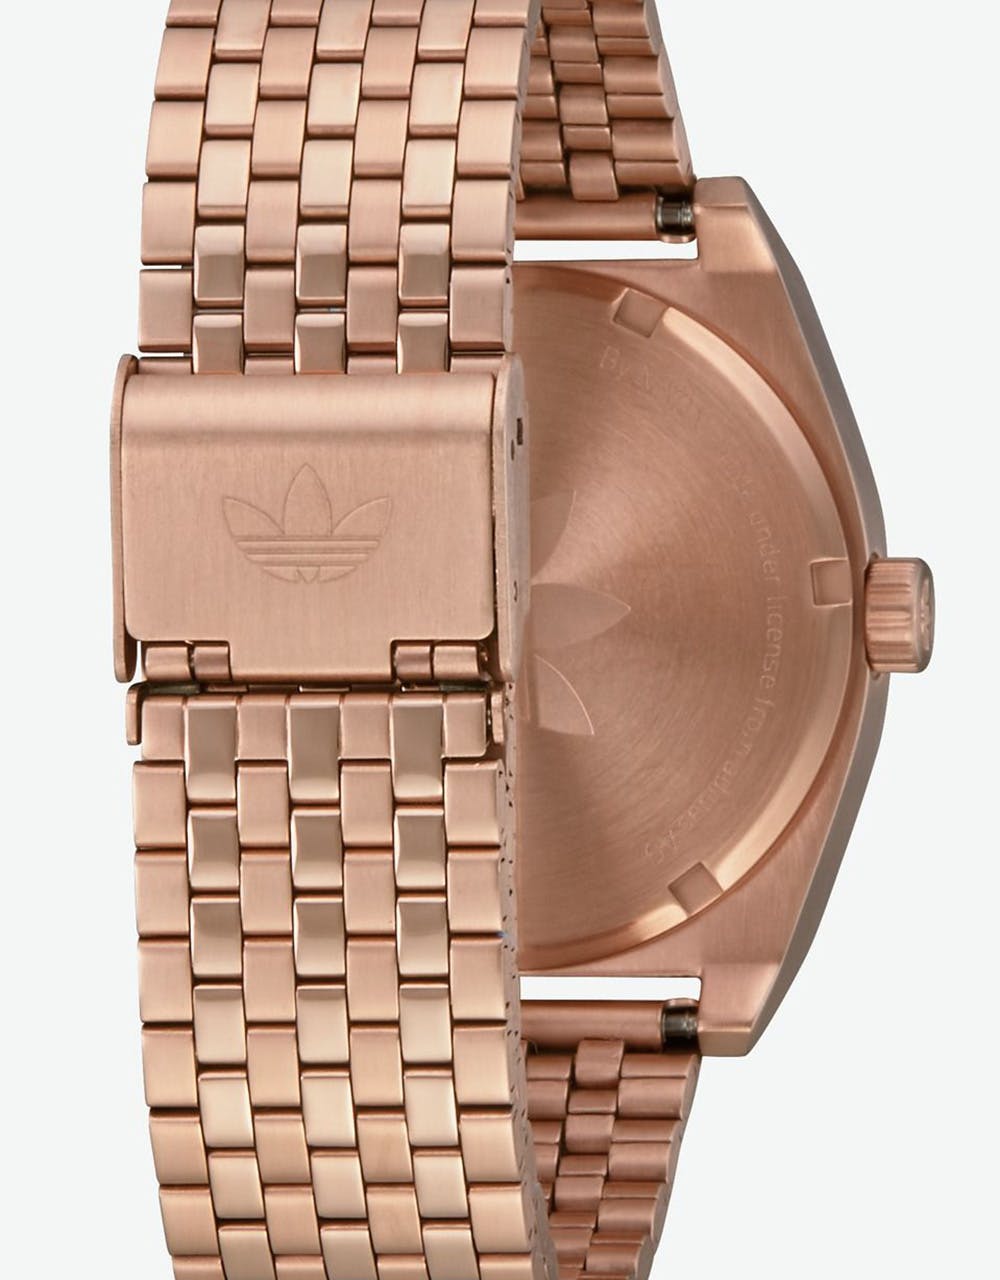 Adidas Process M1 Watch - All Rose Gold